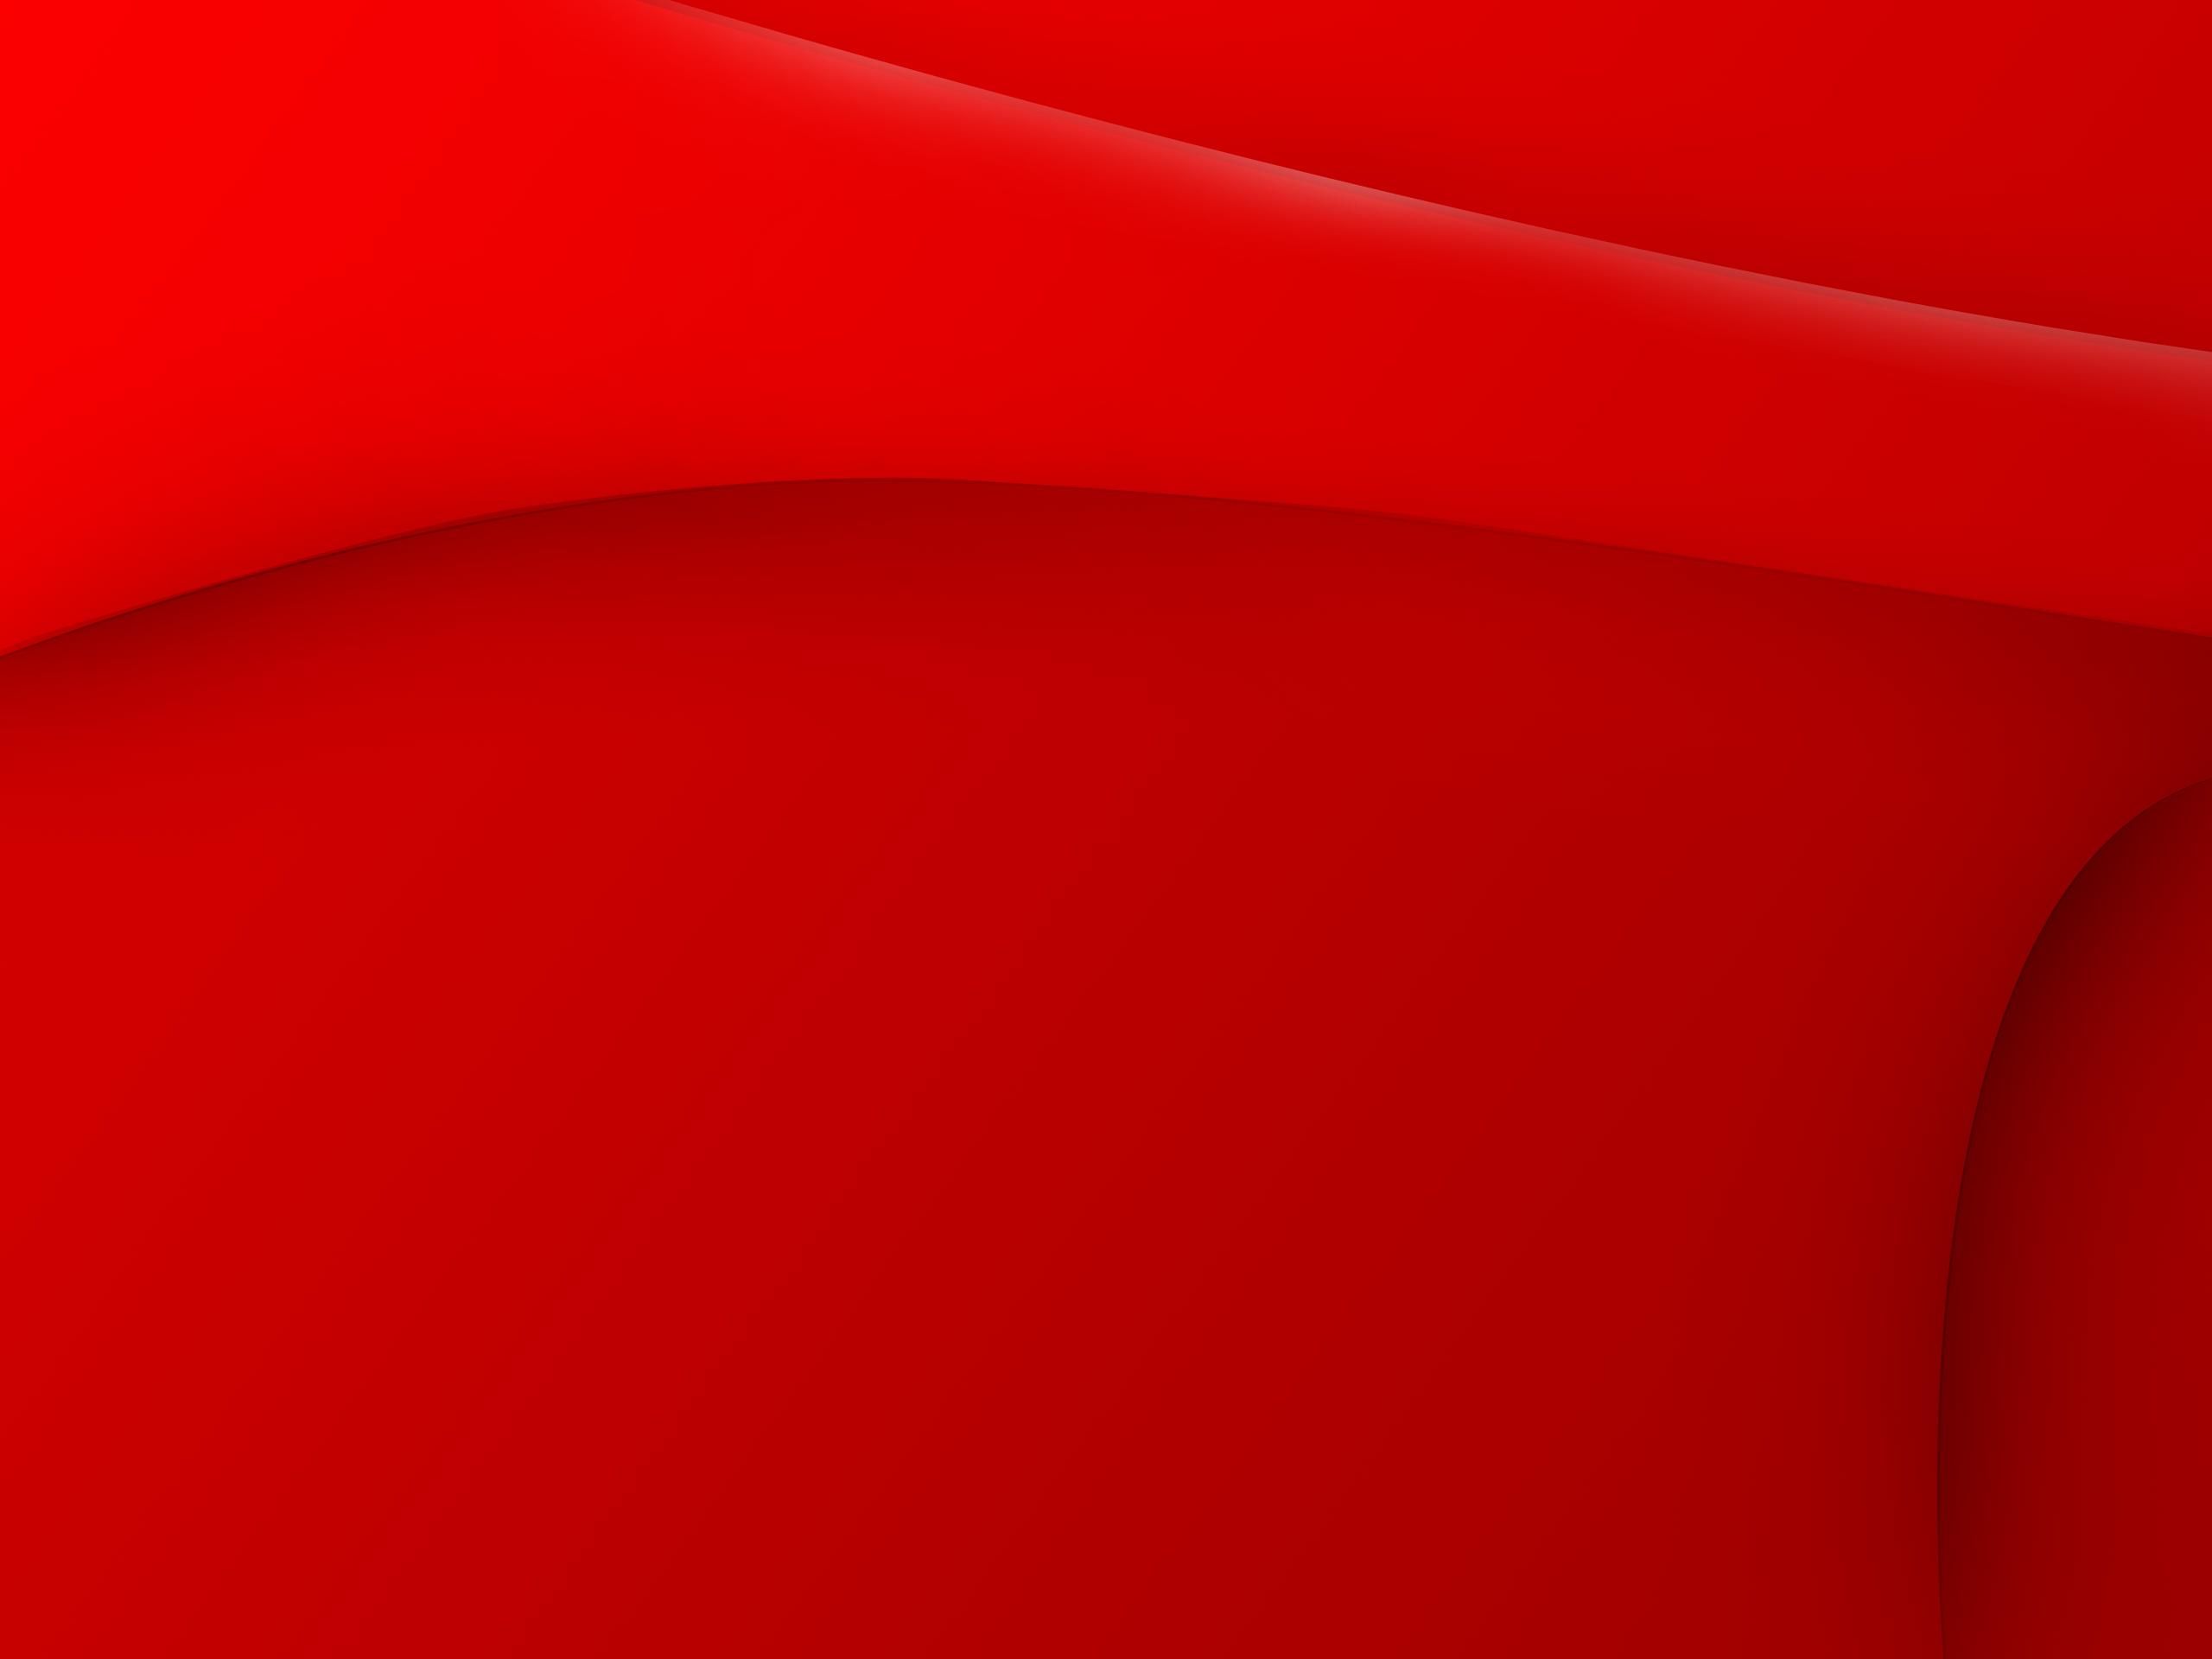 Red Backgrounds Hd Free Download Pixelstalk Net